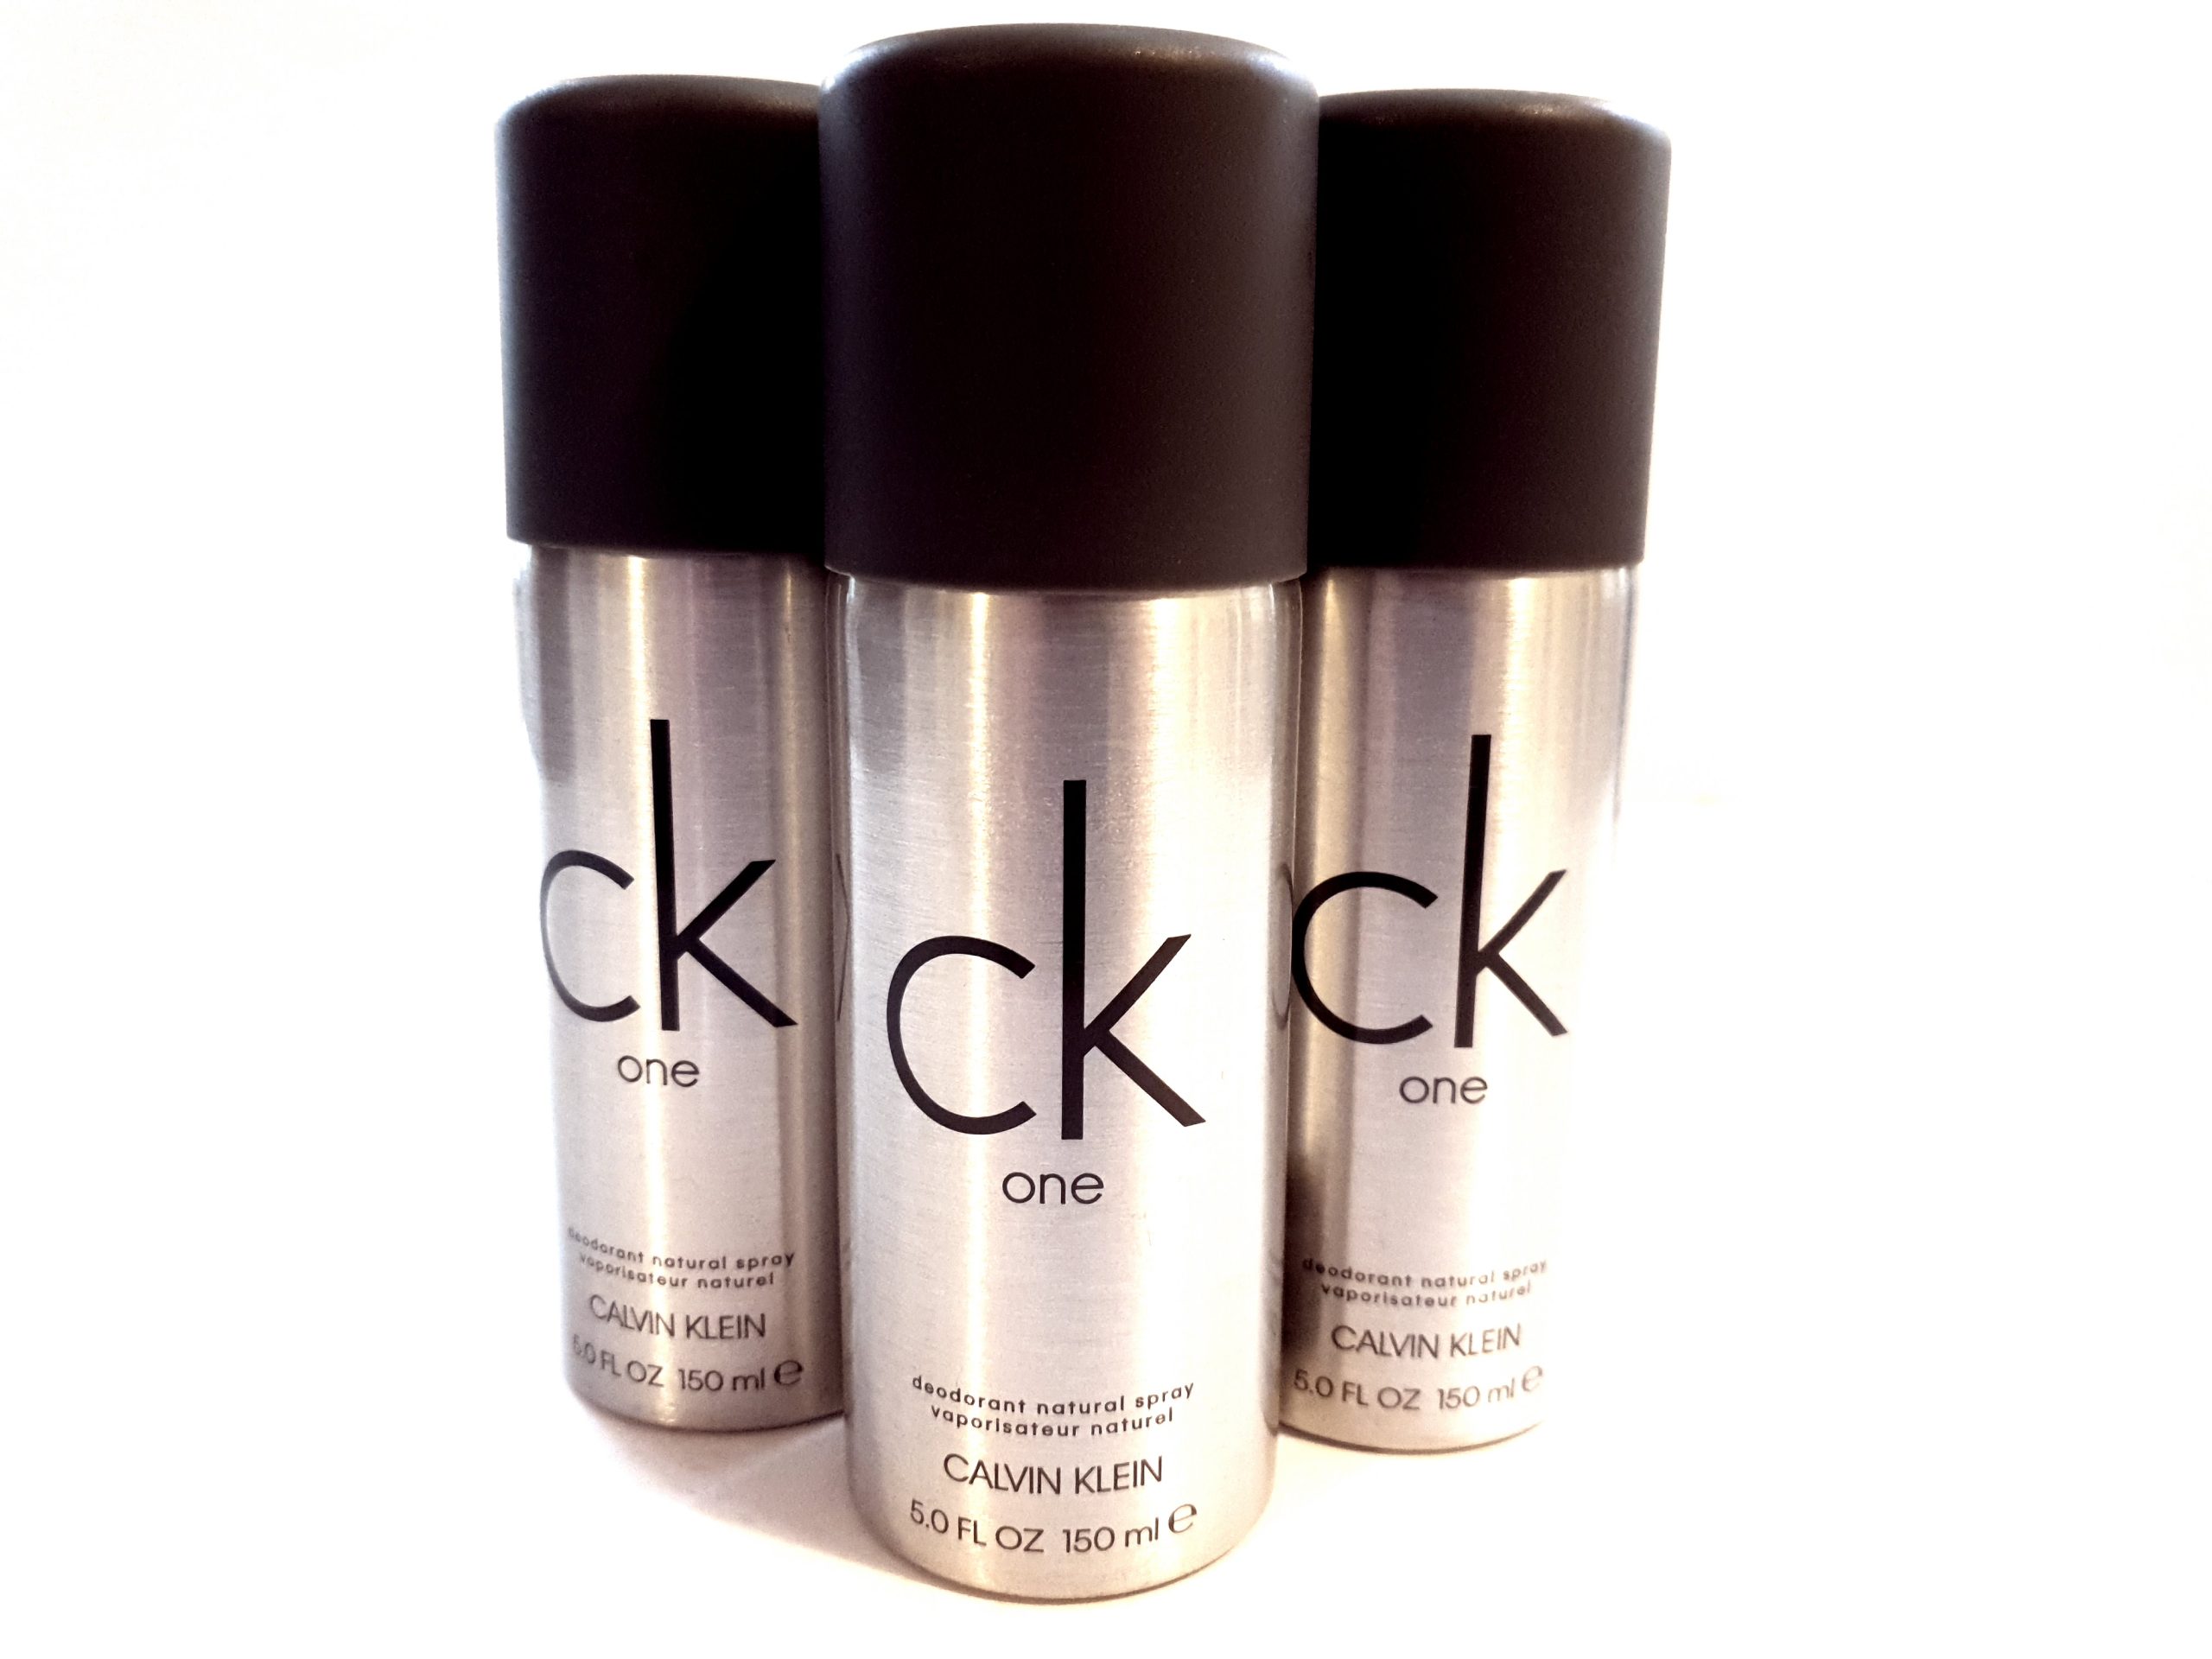 Three bottles of CK One Deodorant Body Spray 150ml on a white background.